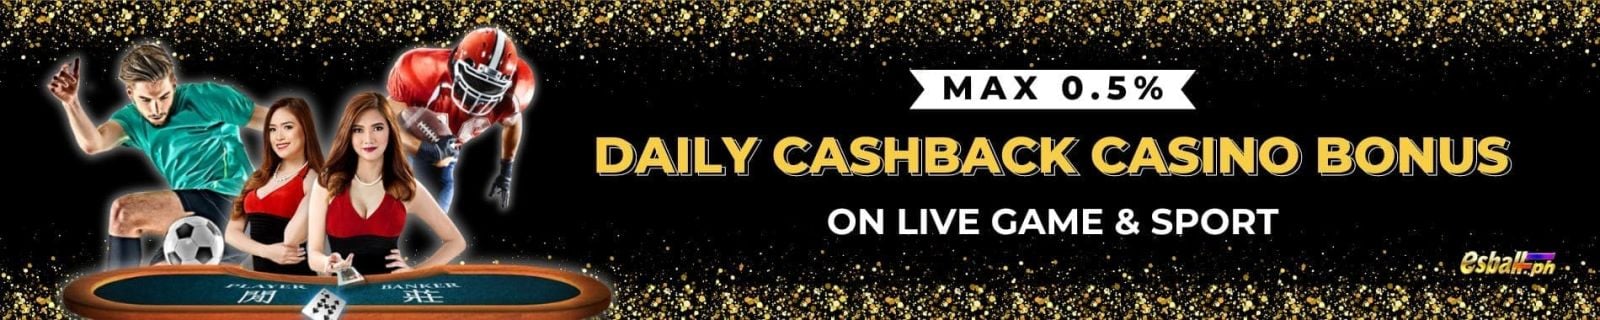 Daily Cashback Casino Bonus ₱5,000 sa Live Game & Sport